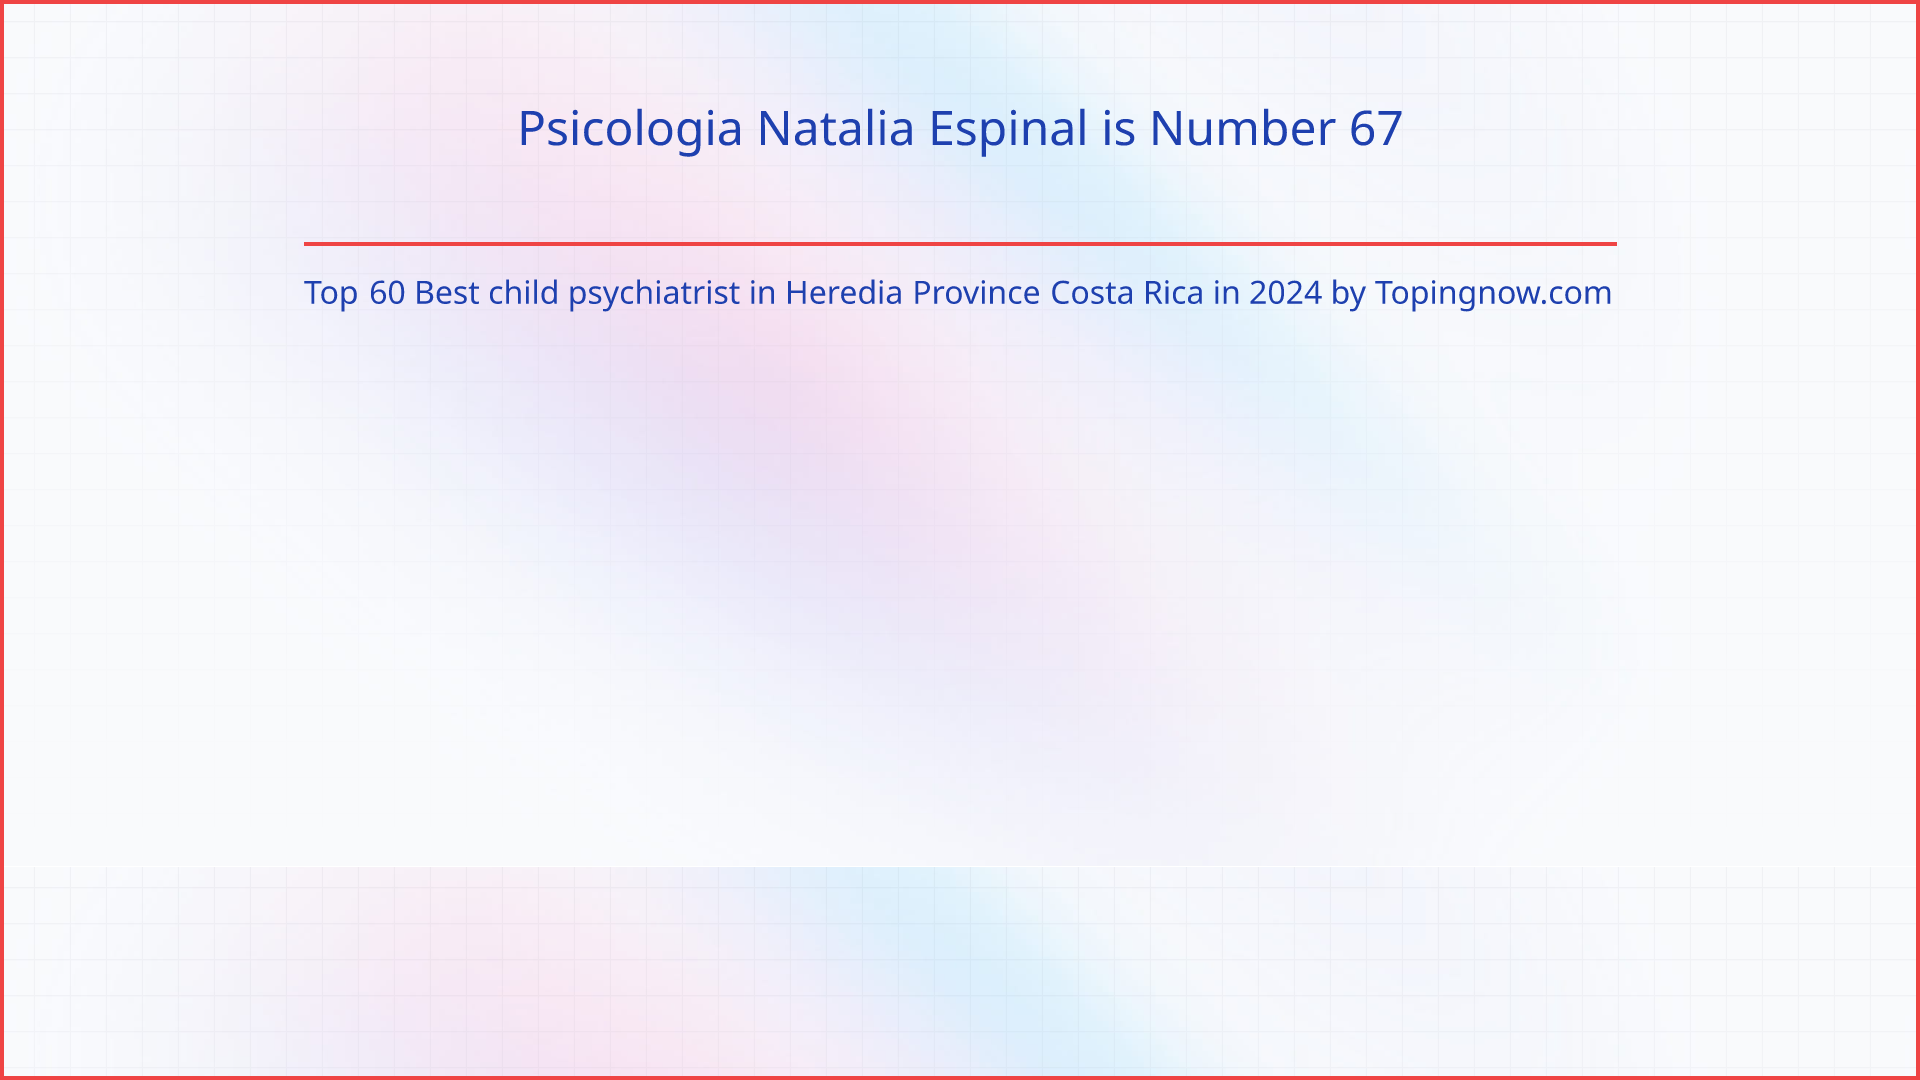 Psicologia Natalia Espinal: Top 60 Best child psychiatrist in Heredia Province Costa Rica in 2024